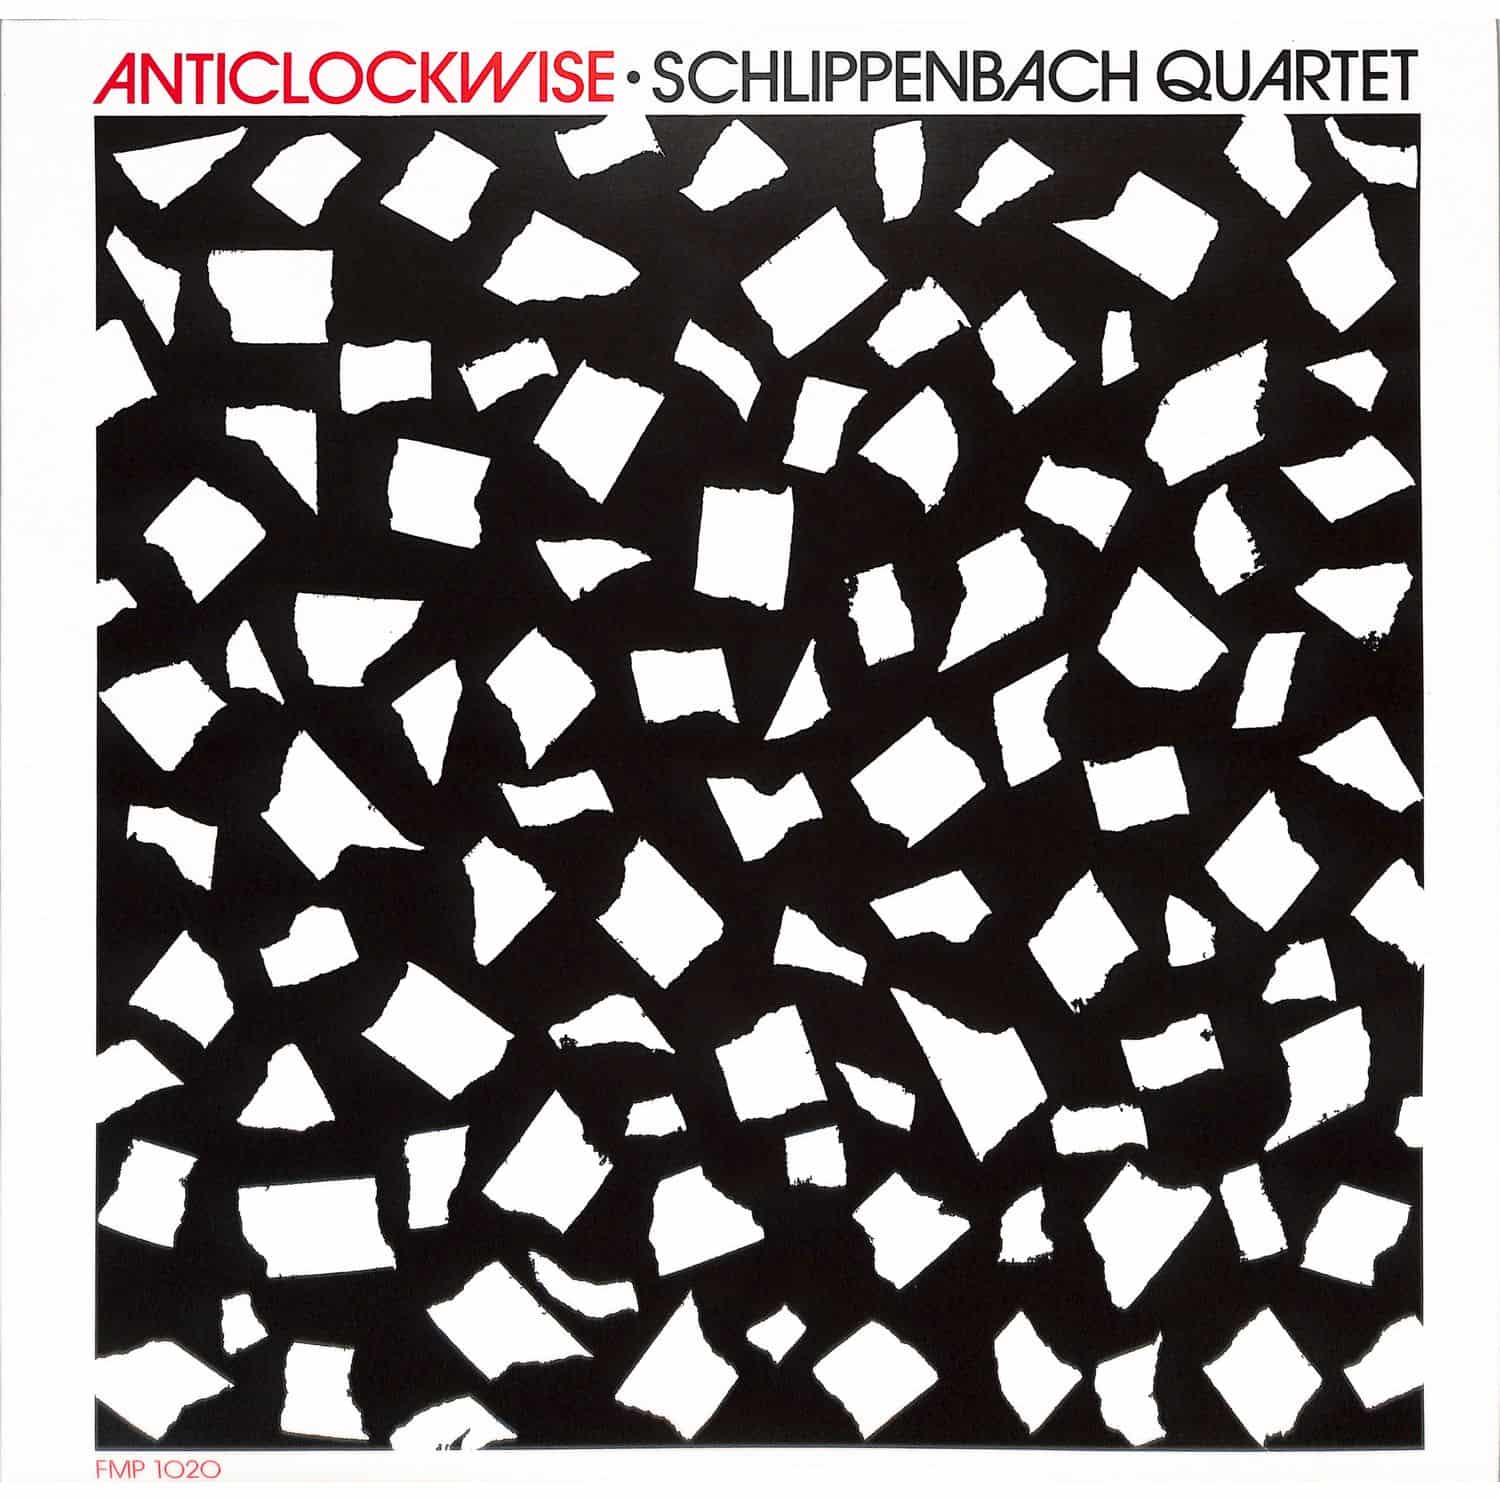 Schippenbach Quartet - ANTICLOCKWISE 